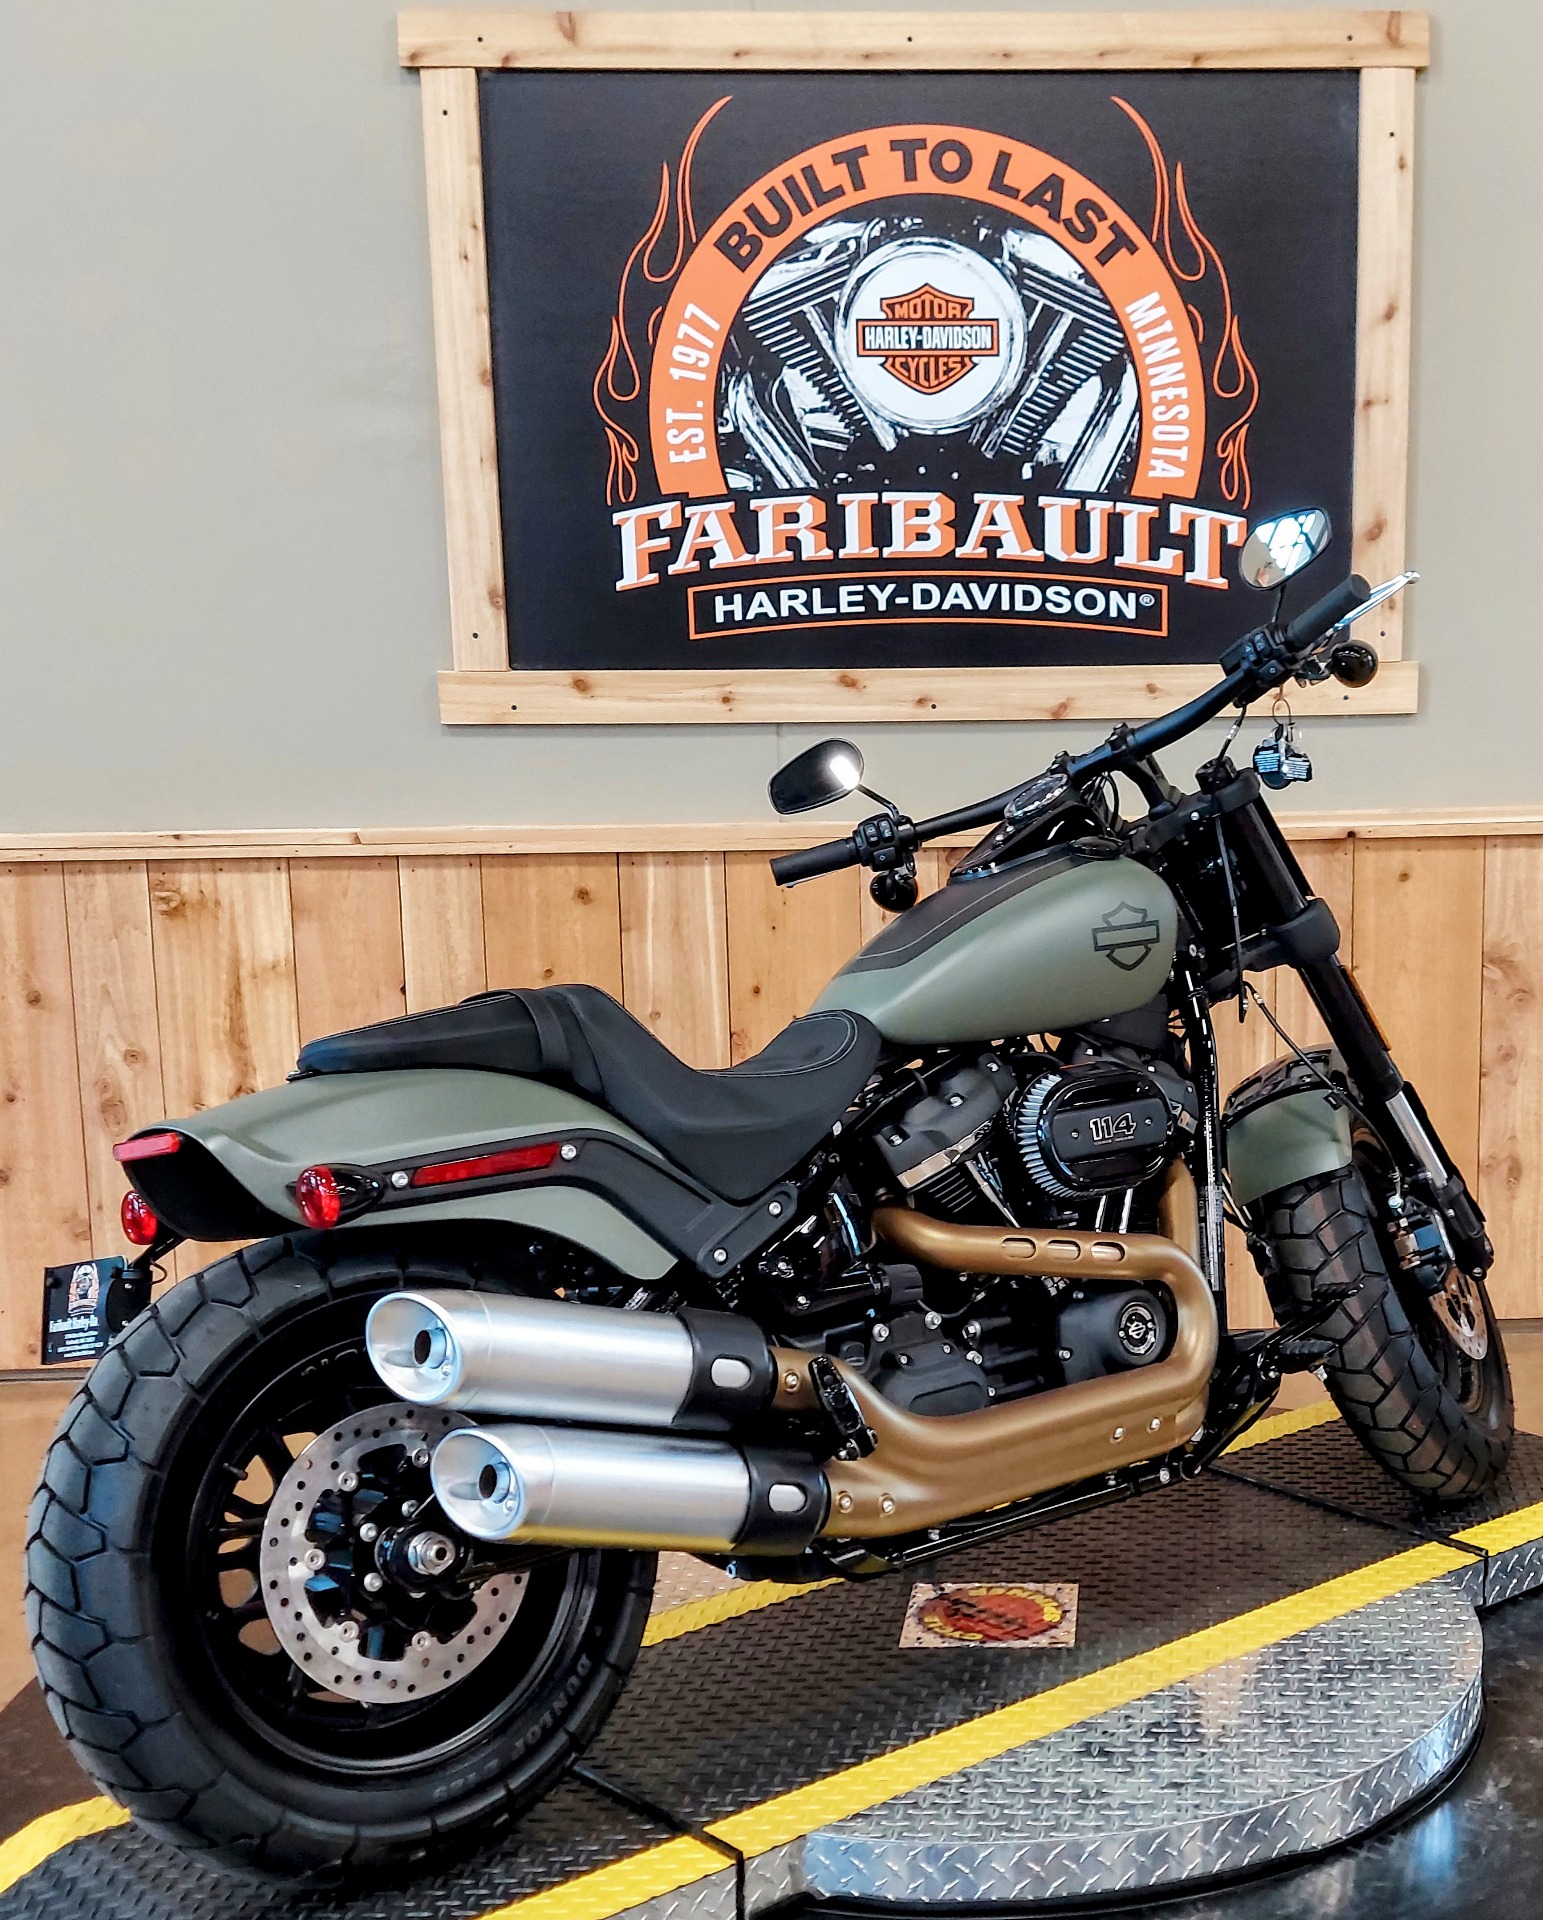 New 2021 Harley Davidson Fat Bob 114 Motorcycles In Faribault Mn Sf031766 Deadwood Green Denim